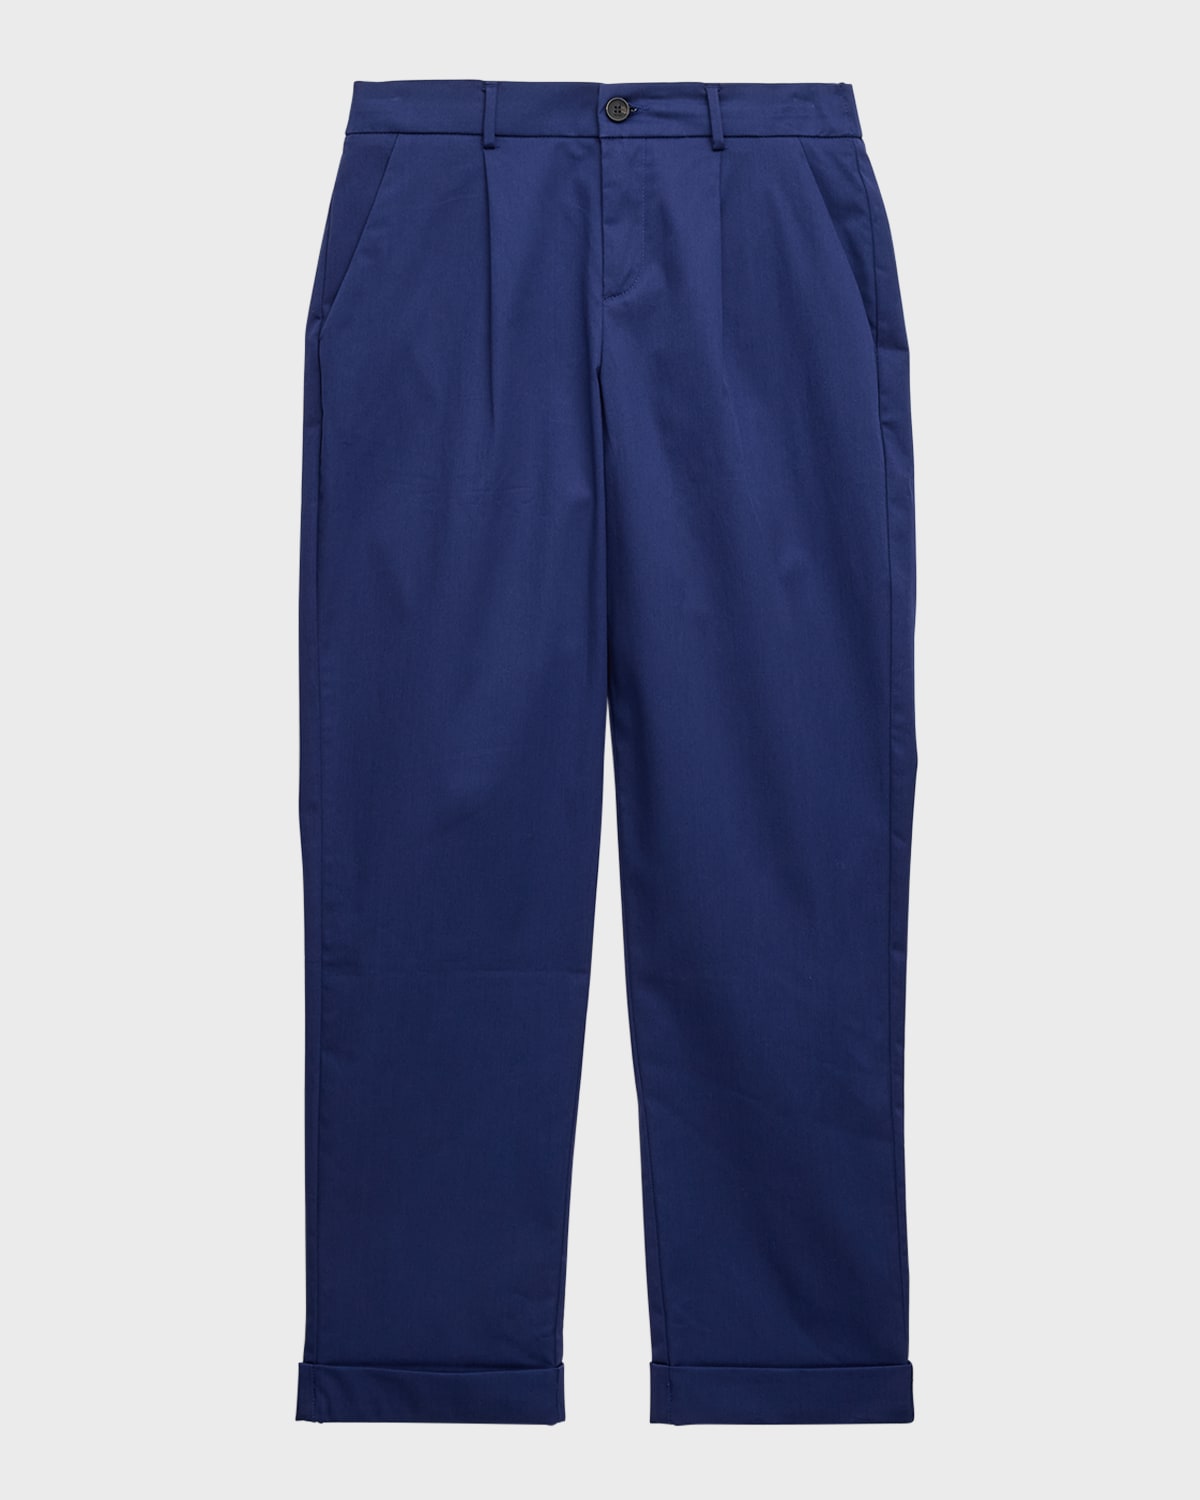 Fendi Kids' Boy's Chino Pants W/ Monogram Pocket In Navy